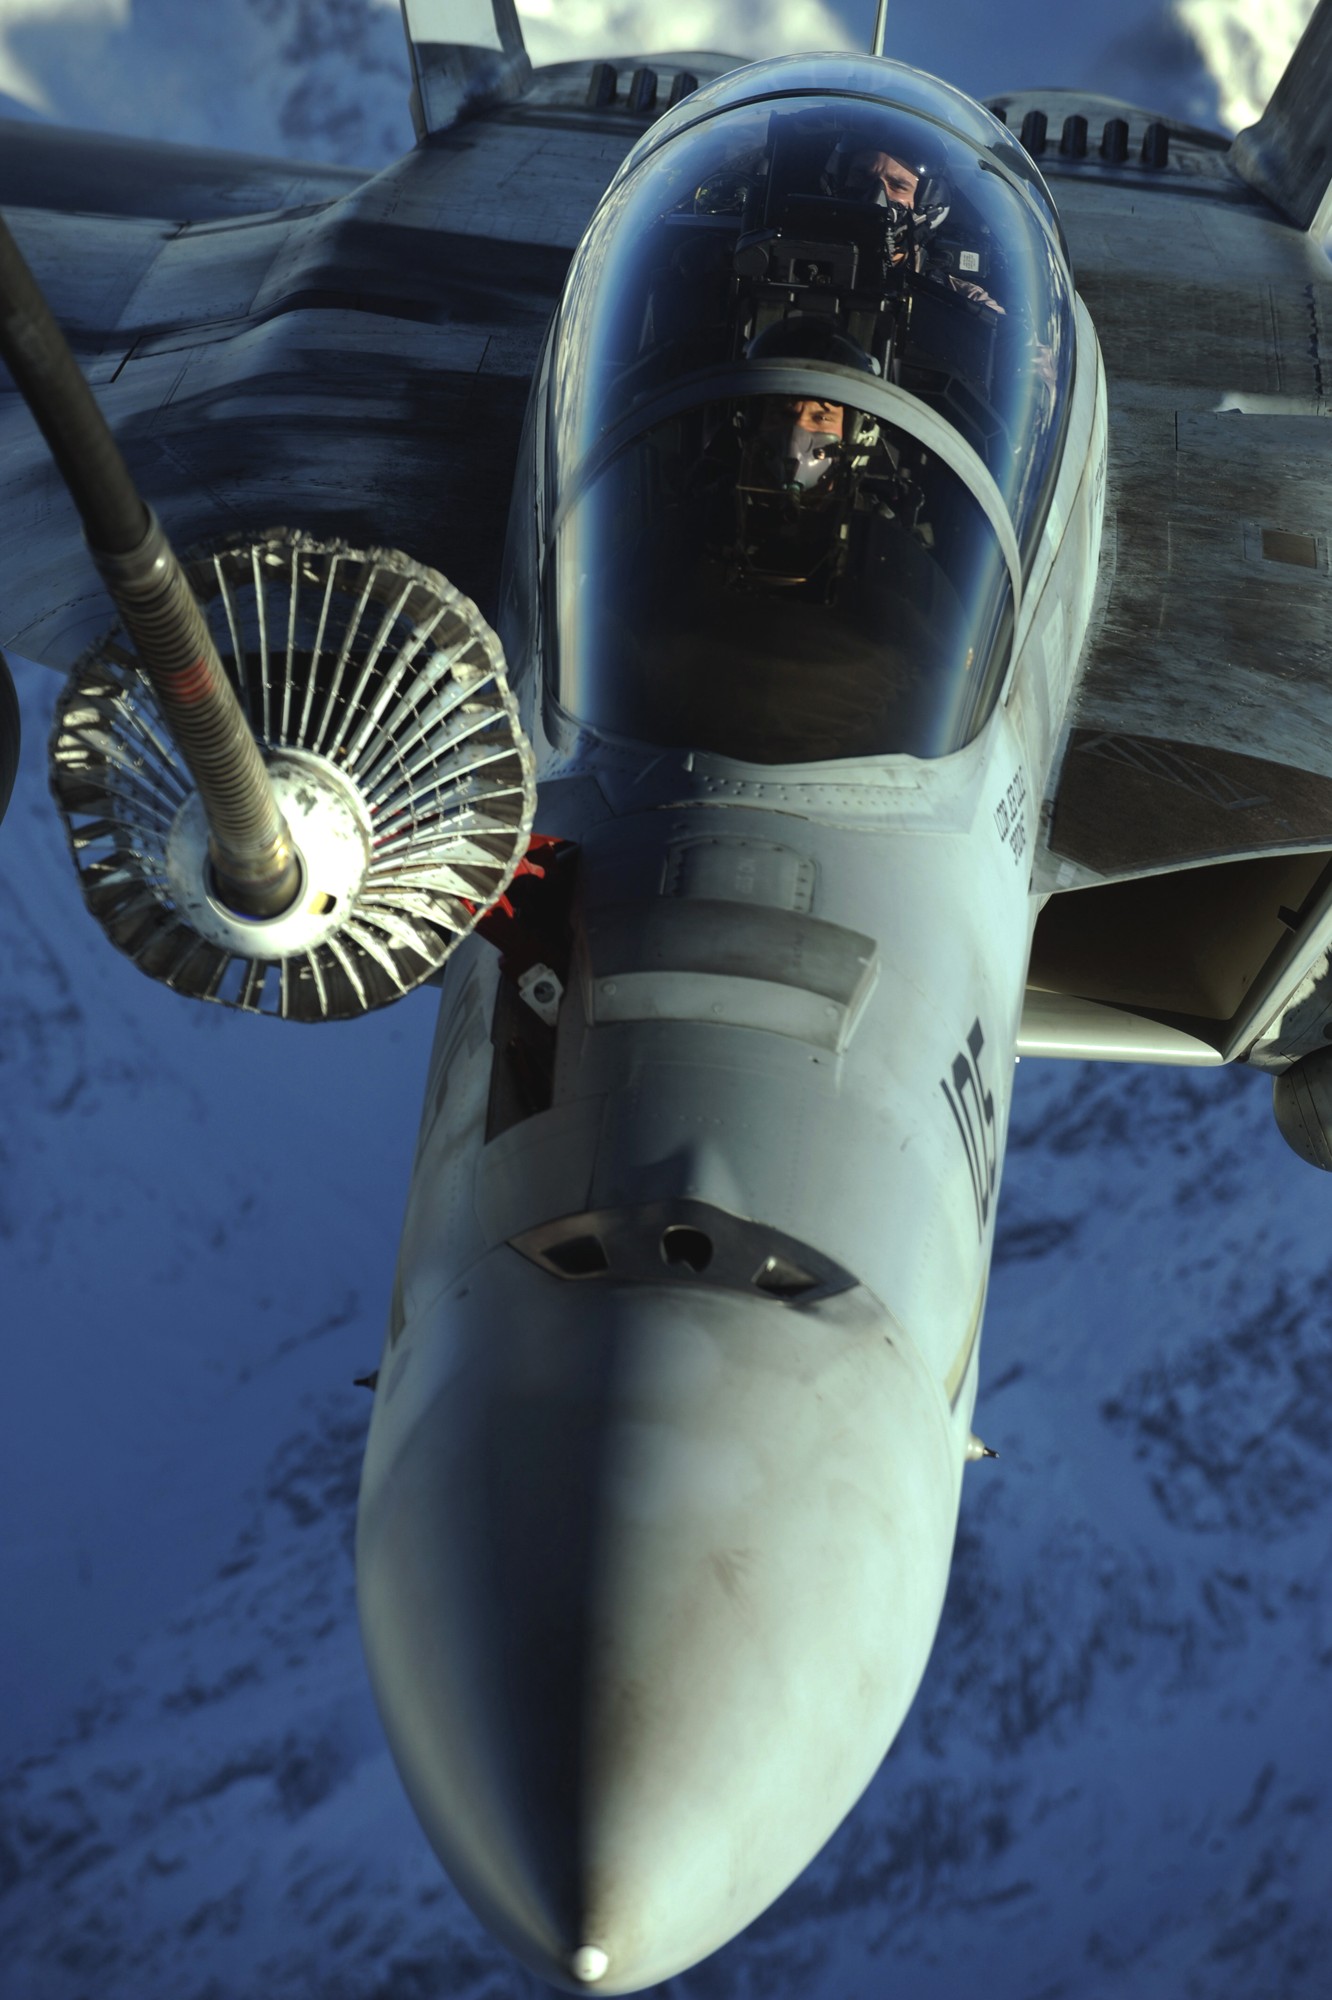 vfa-41 black aces strike fighter squadron f/a-18f super hornet cvw-11 cvn-68 uss nimitz us navy 10